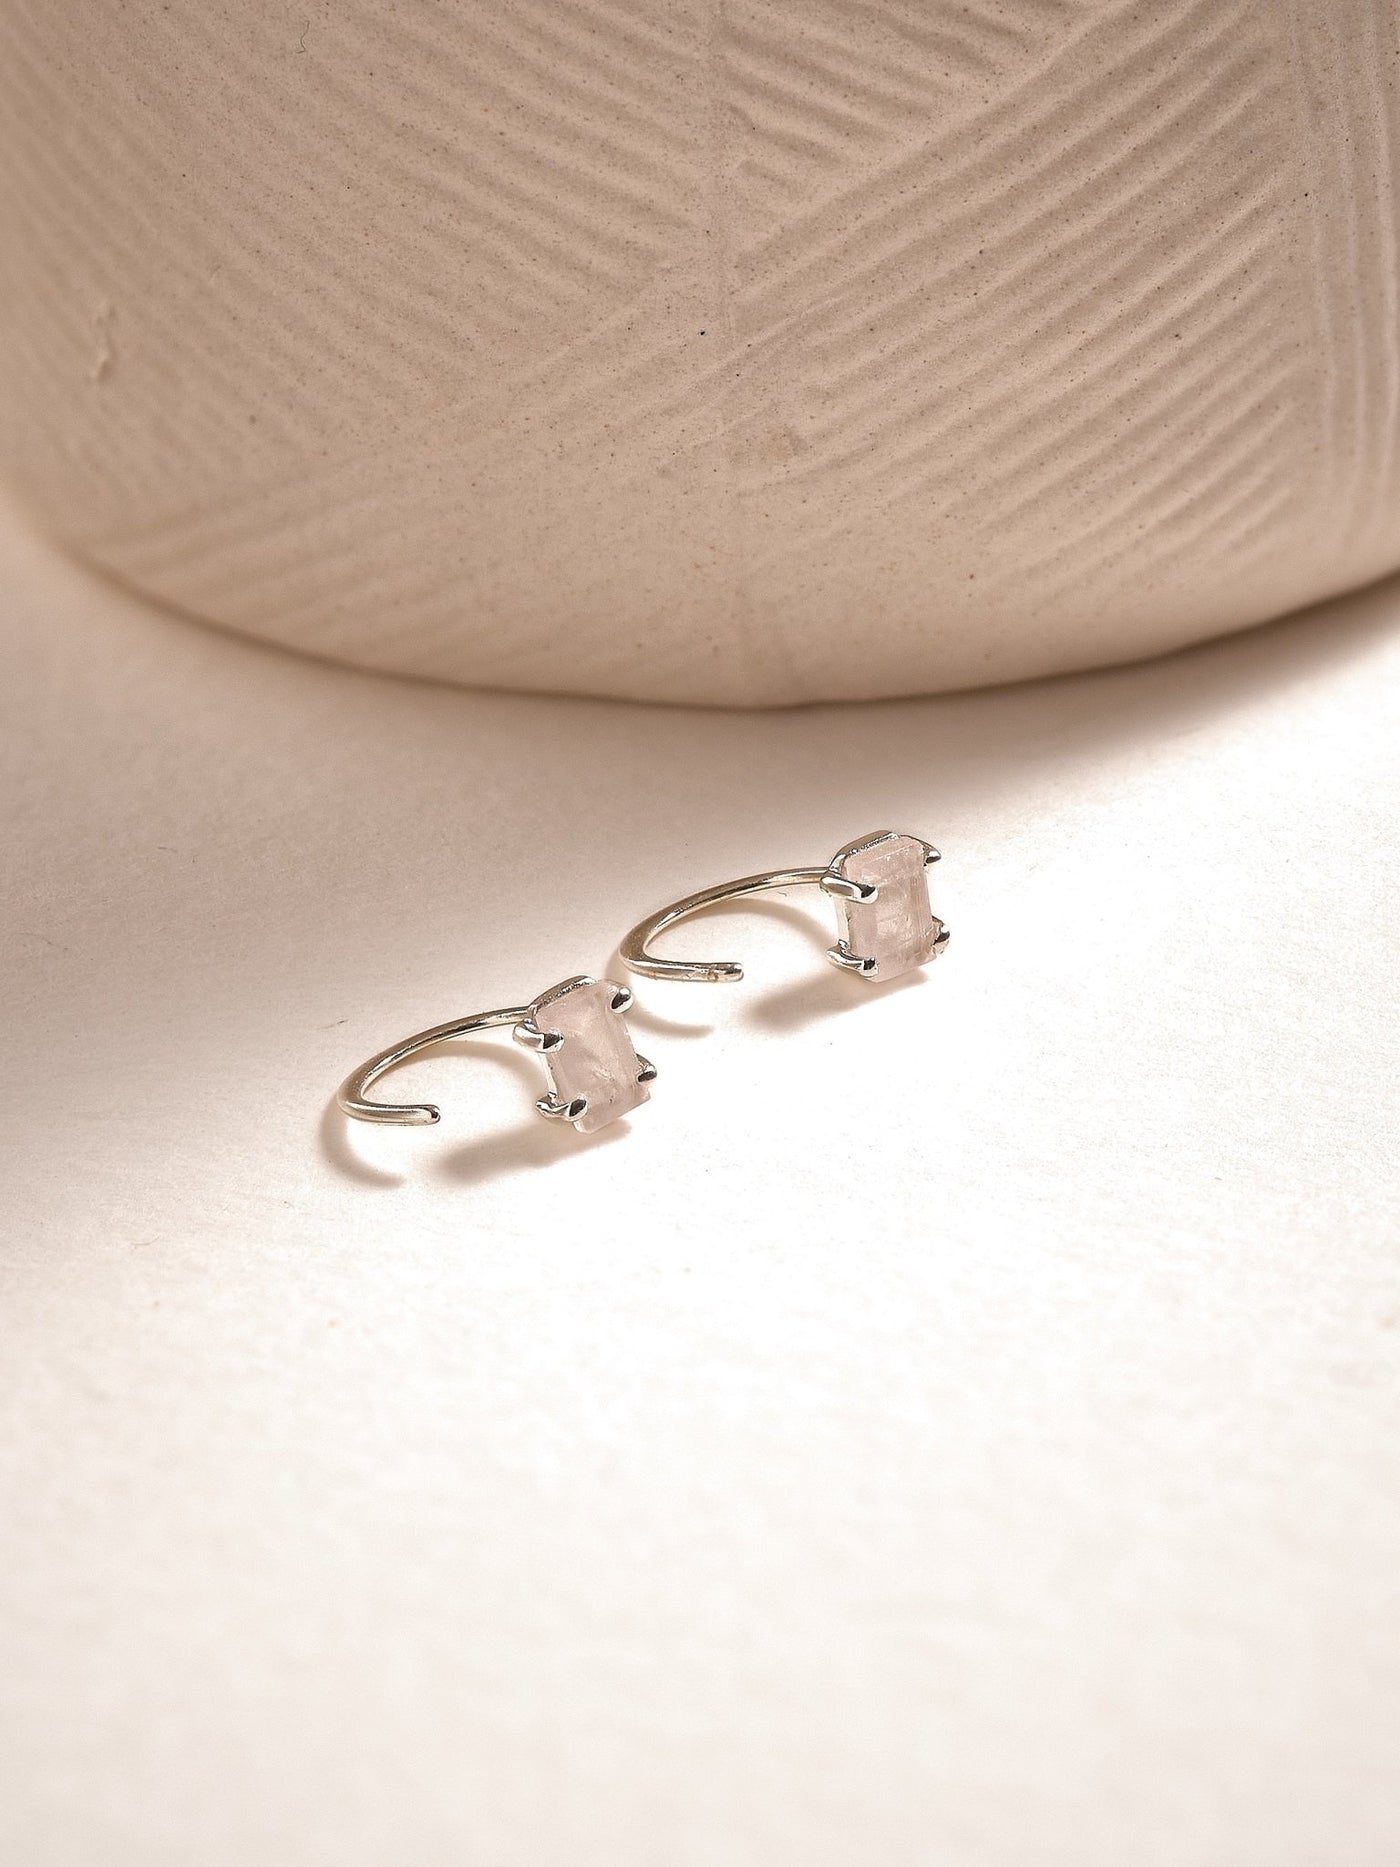 Trudel Gemstone Huggies Earrings - 925 Sterling SilverBackUpItemsBirthday GiftLunai Jewelry